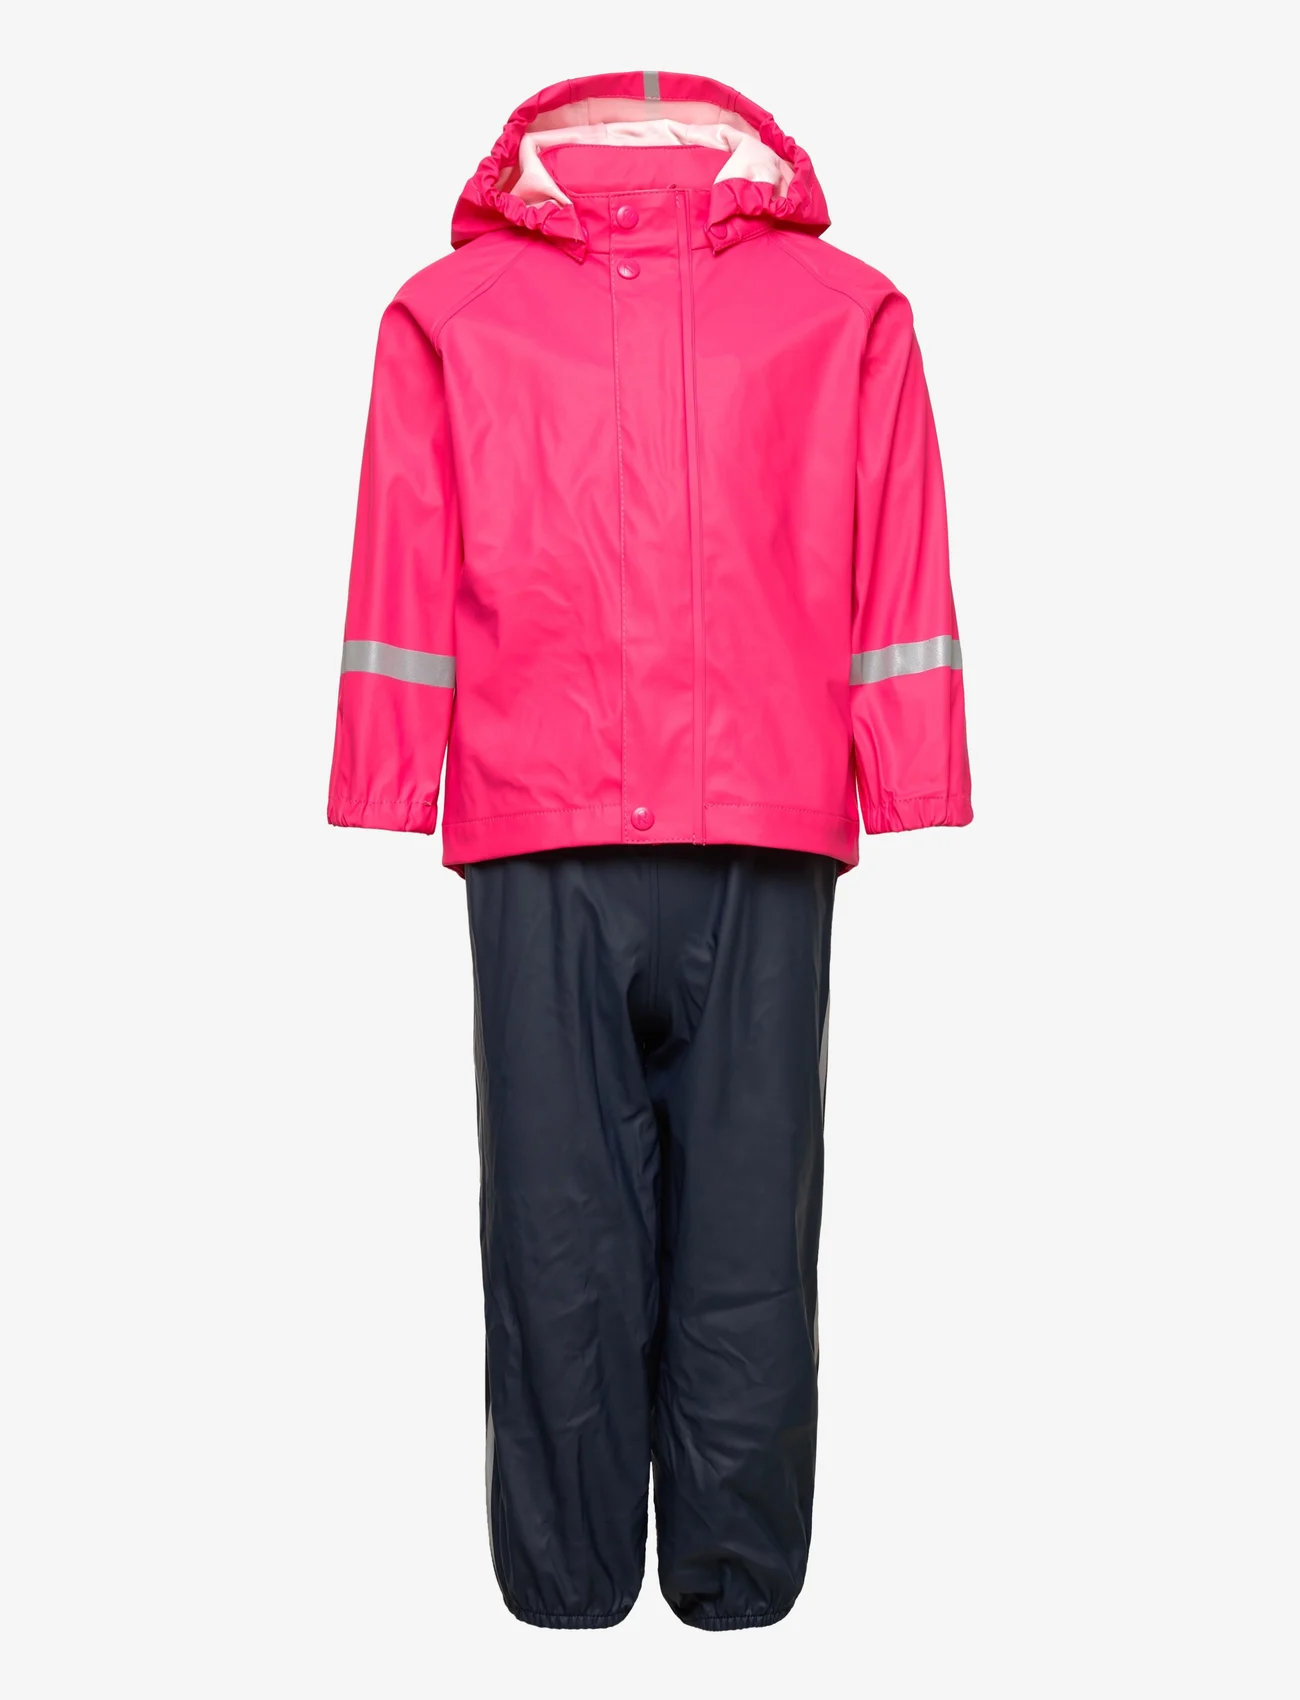 Reima - Rain outfit, Tihku - regnsett - candy pink - 0